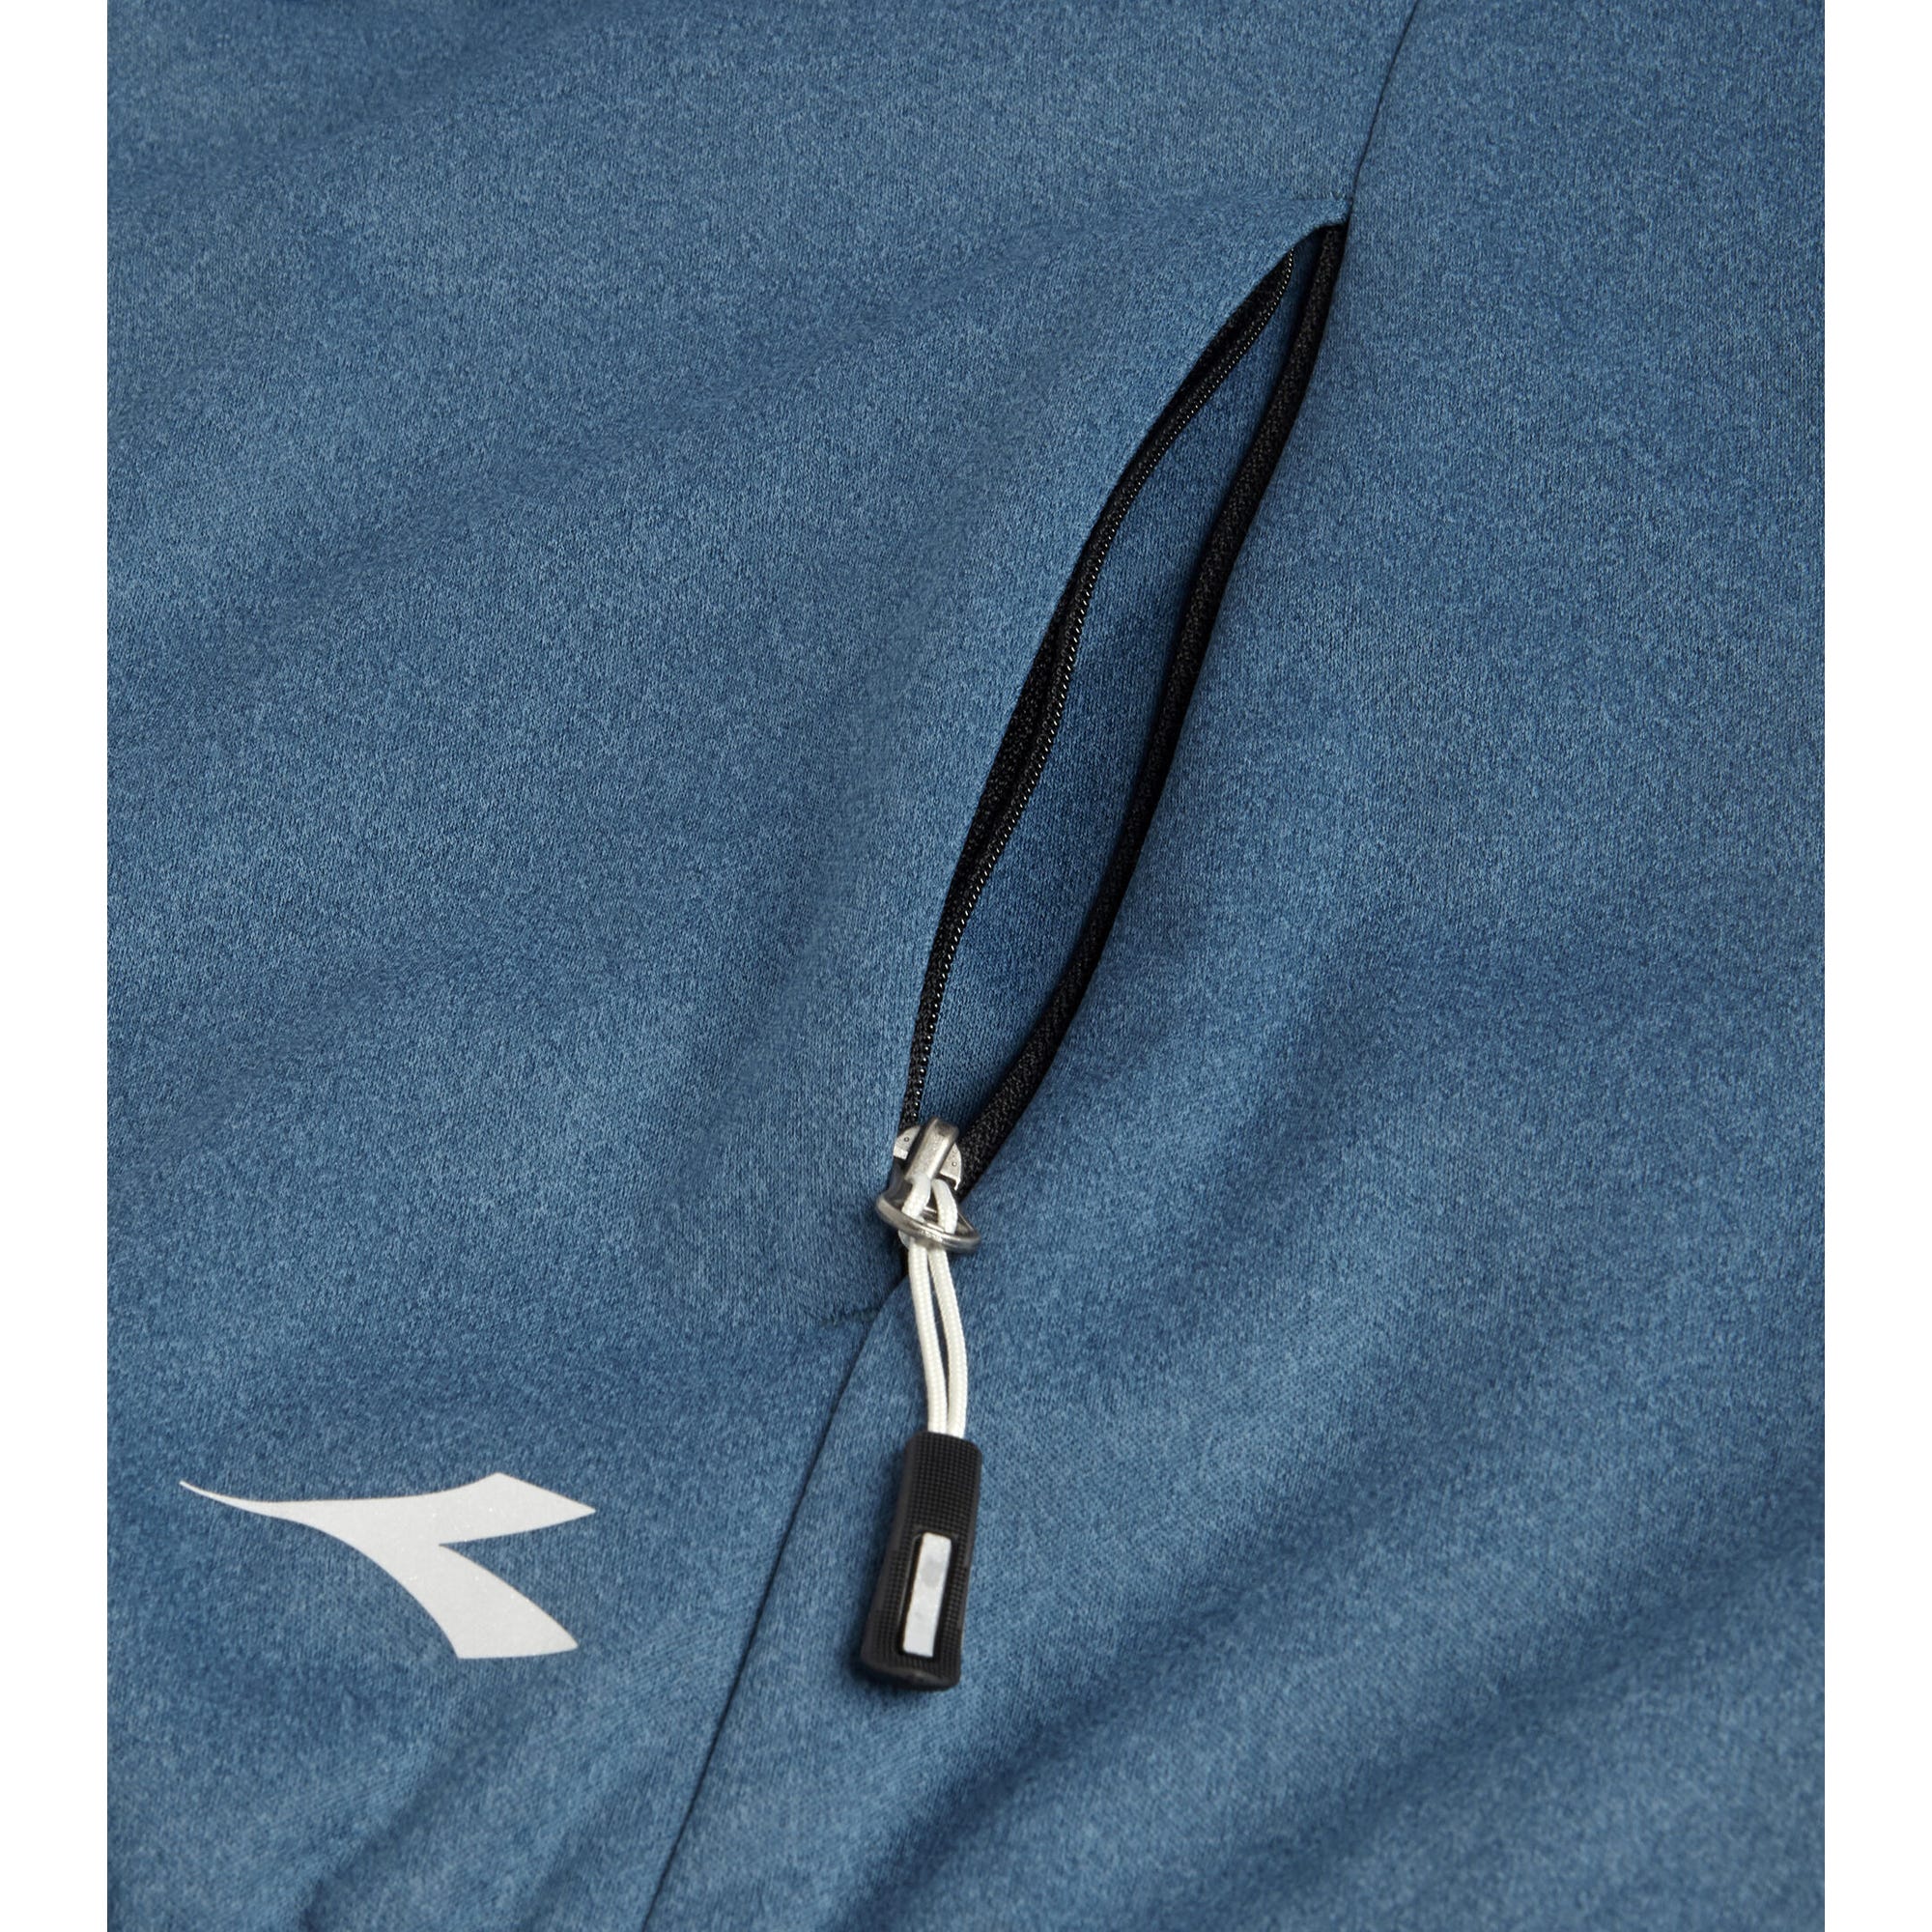 Veste softshell enduite Cross bleu - Diadora - Taille XL 4